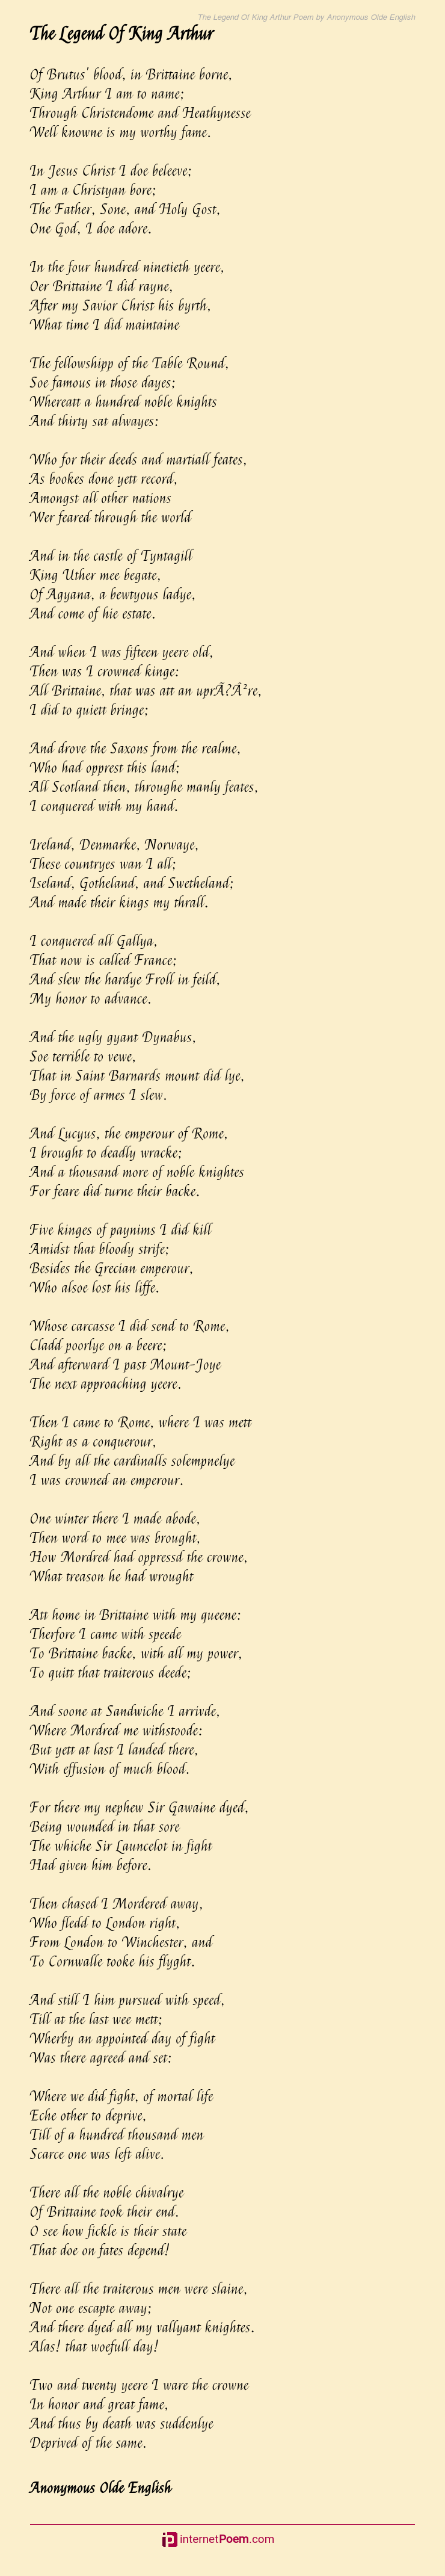 tennyson arthurian poems